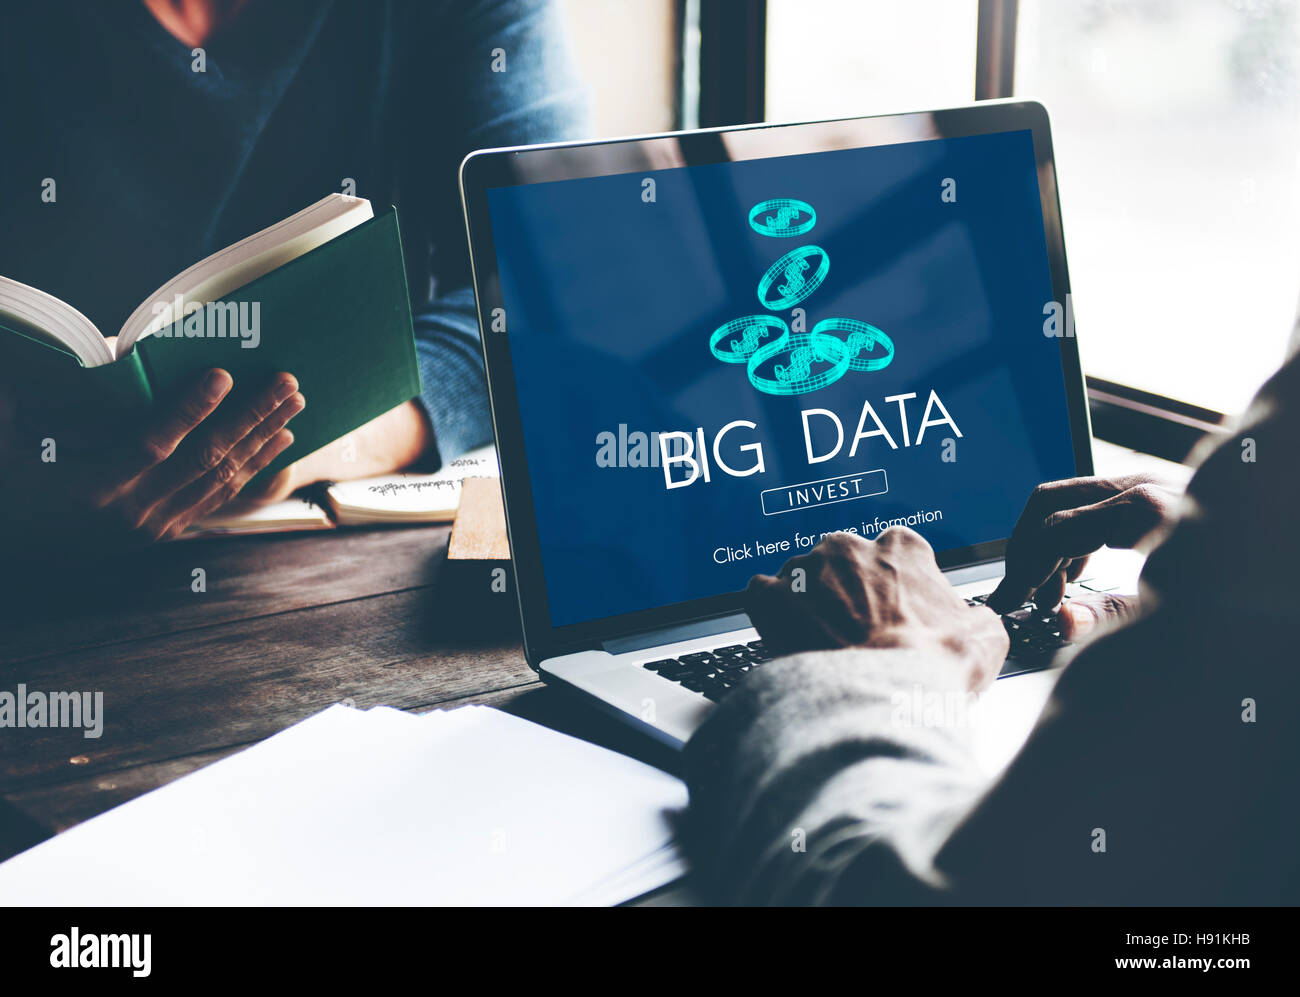 Big Data Digital Information Network Storage Concept Stock Photo